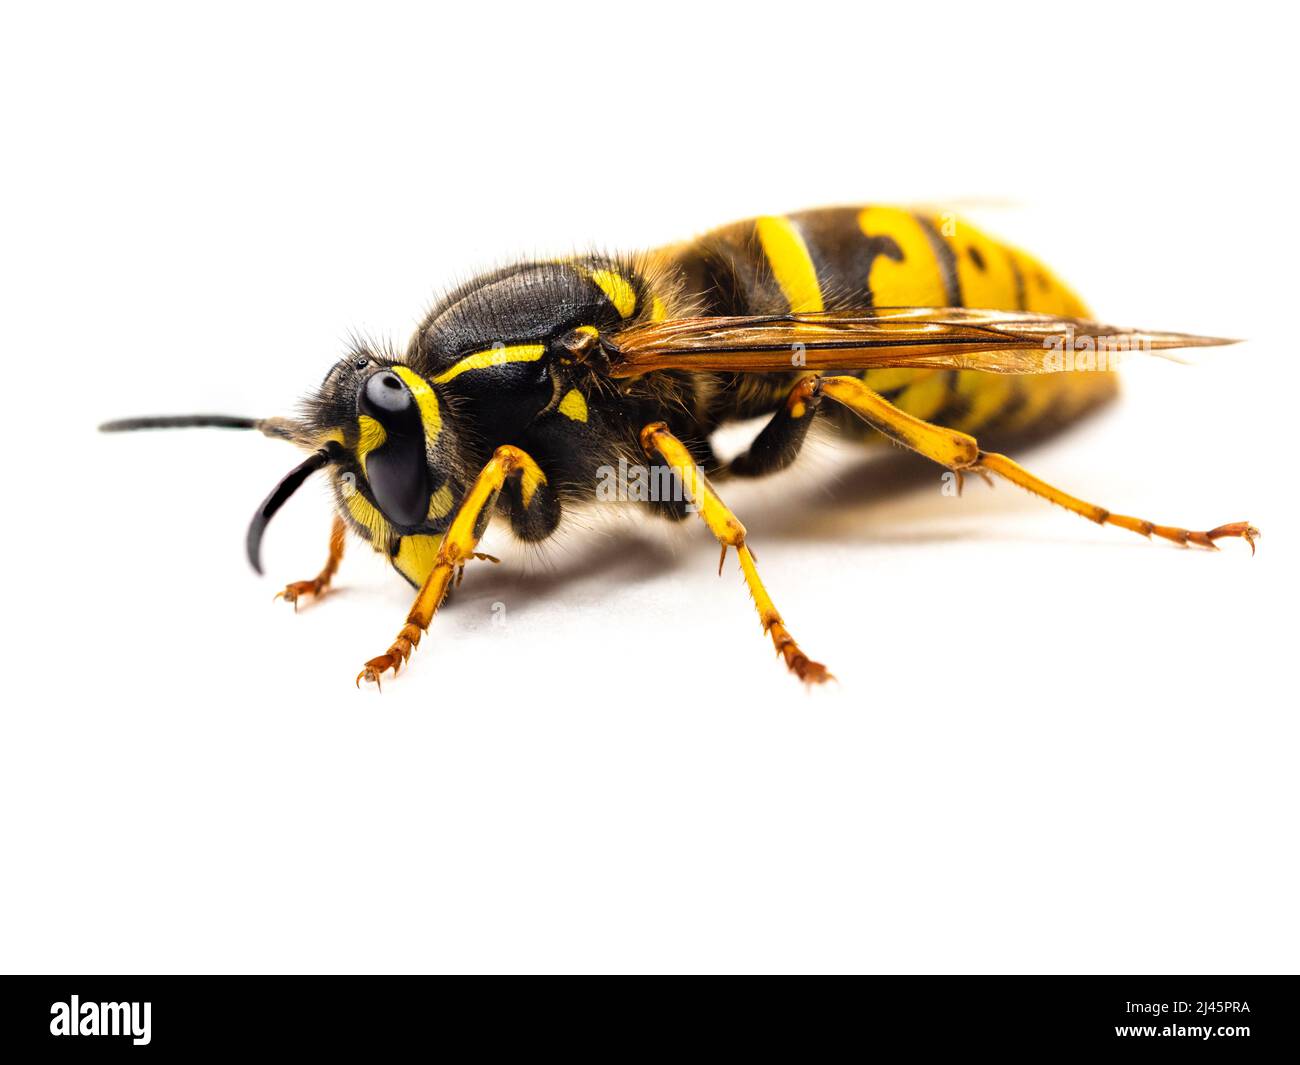 Common yellowjacket wasp, Vespula vulgaris, isolated on a white background Stock Photo